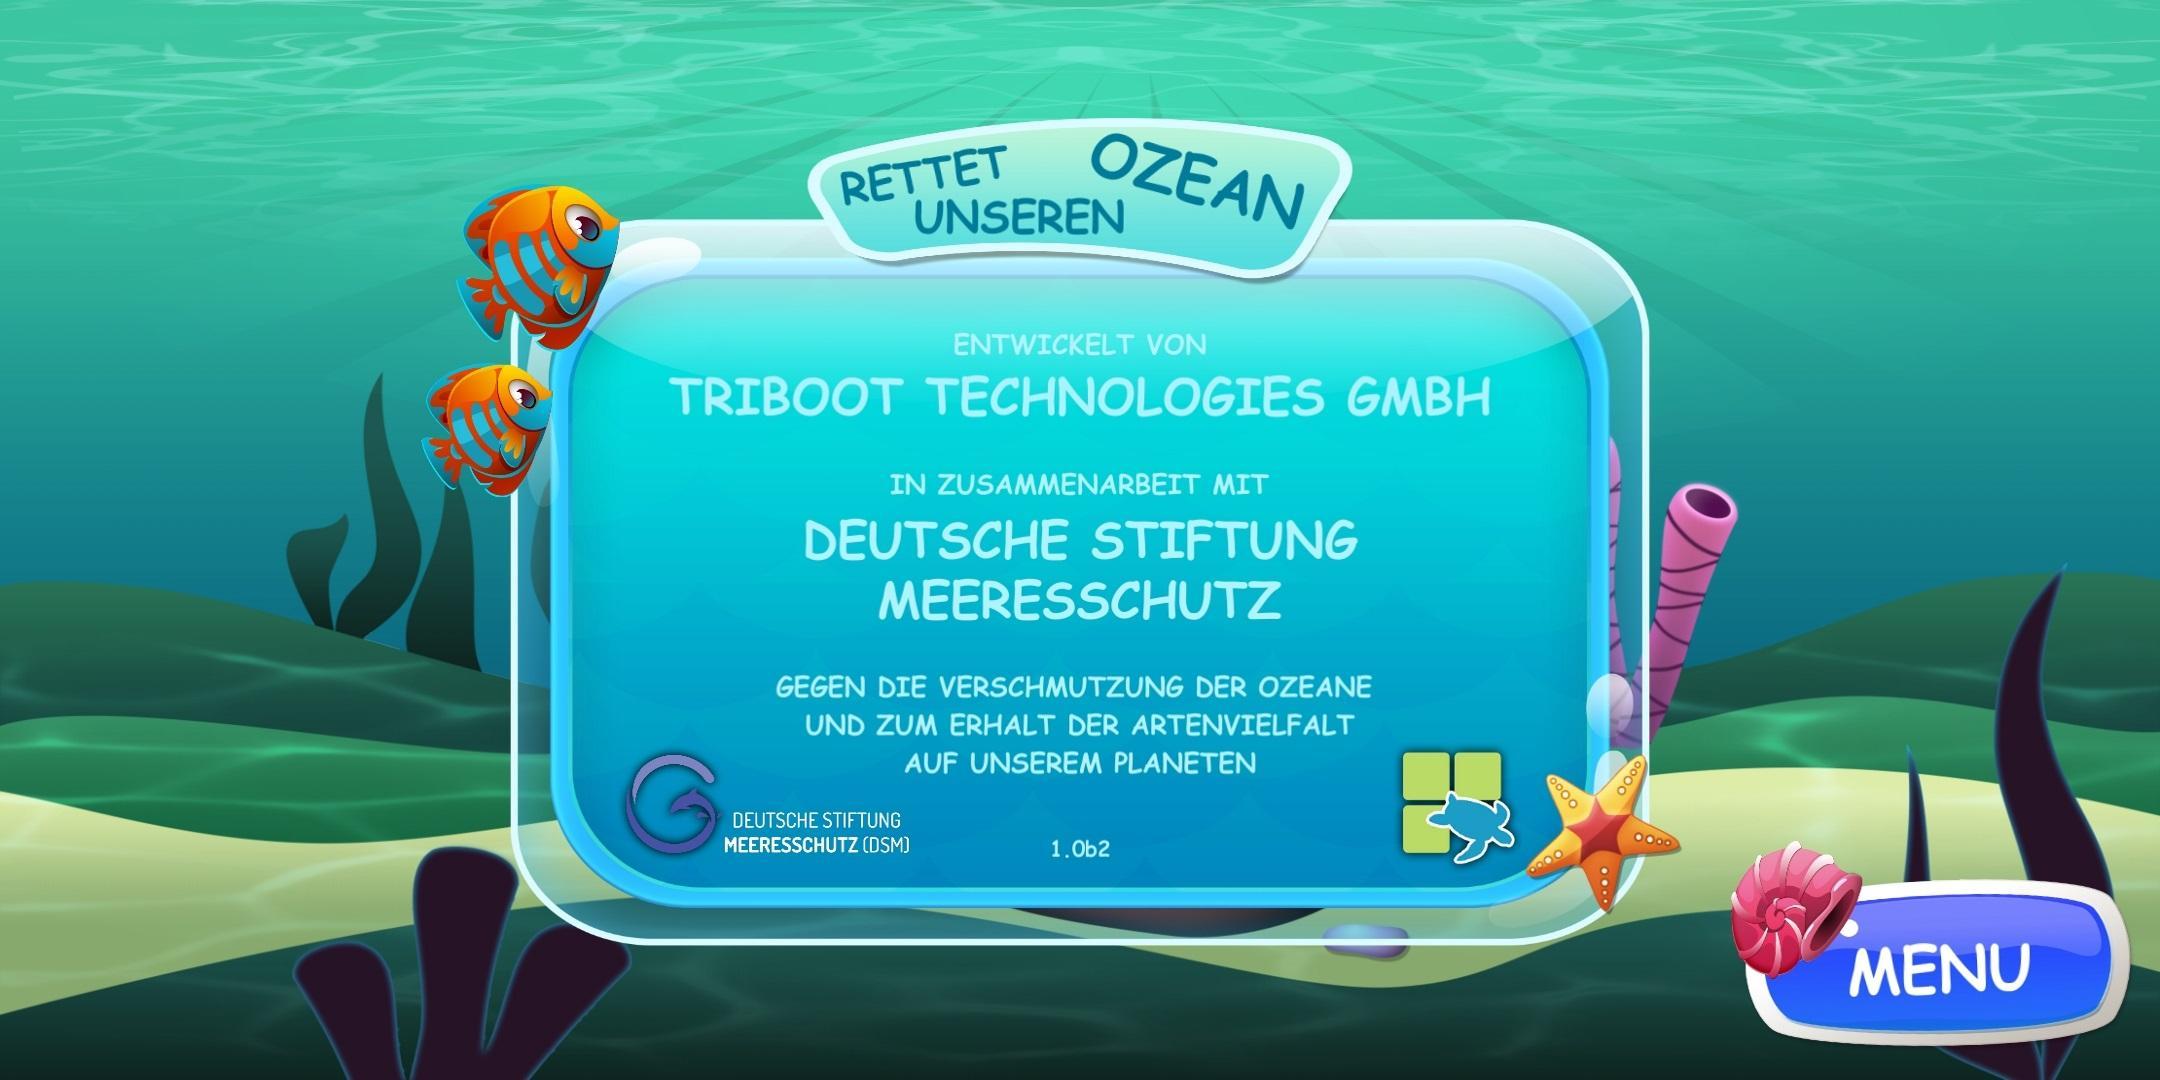 Rettet unseren Ozean Wimmelbildspiel 1.1.2 Screenshot 8